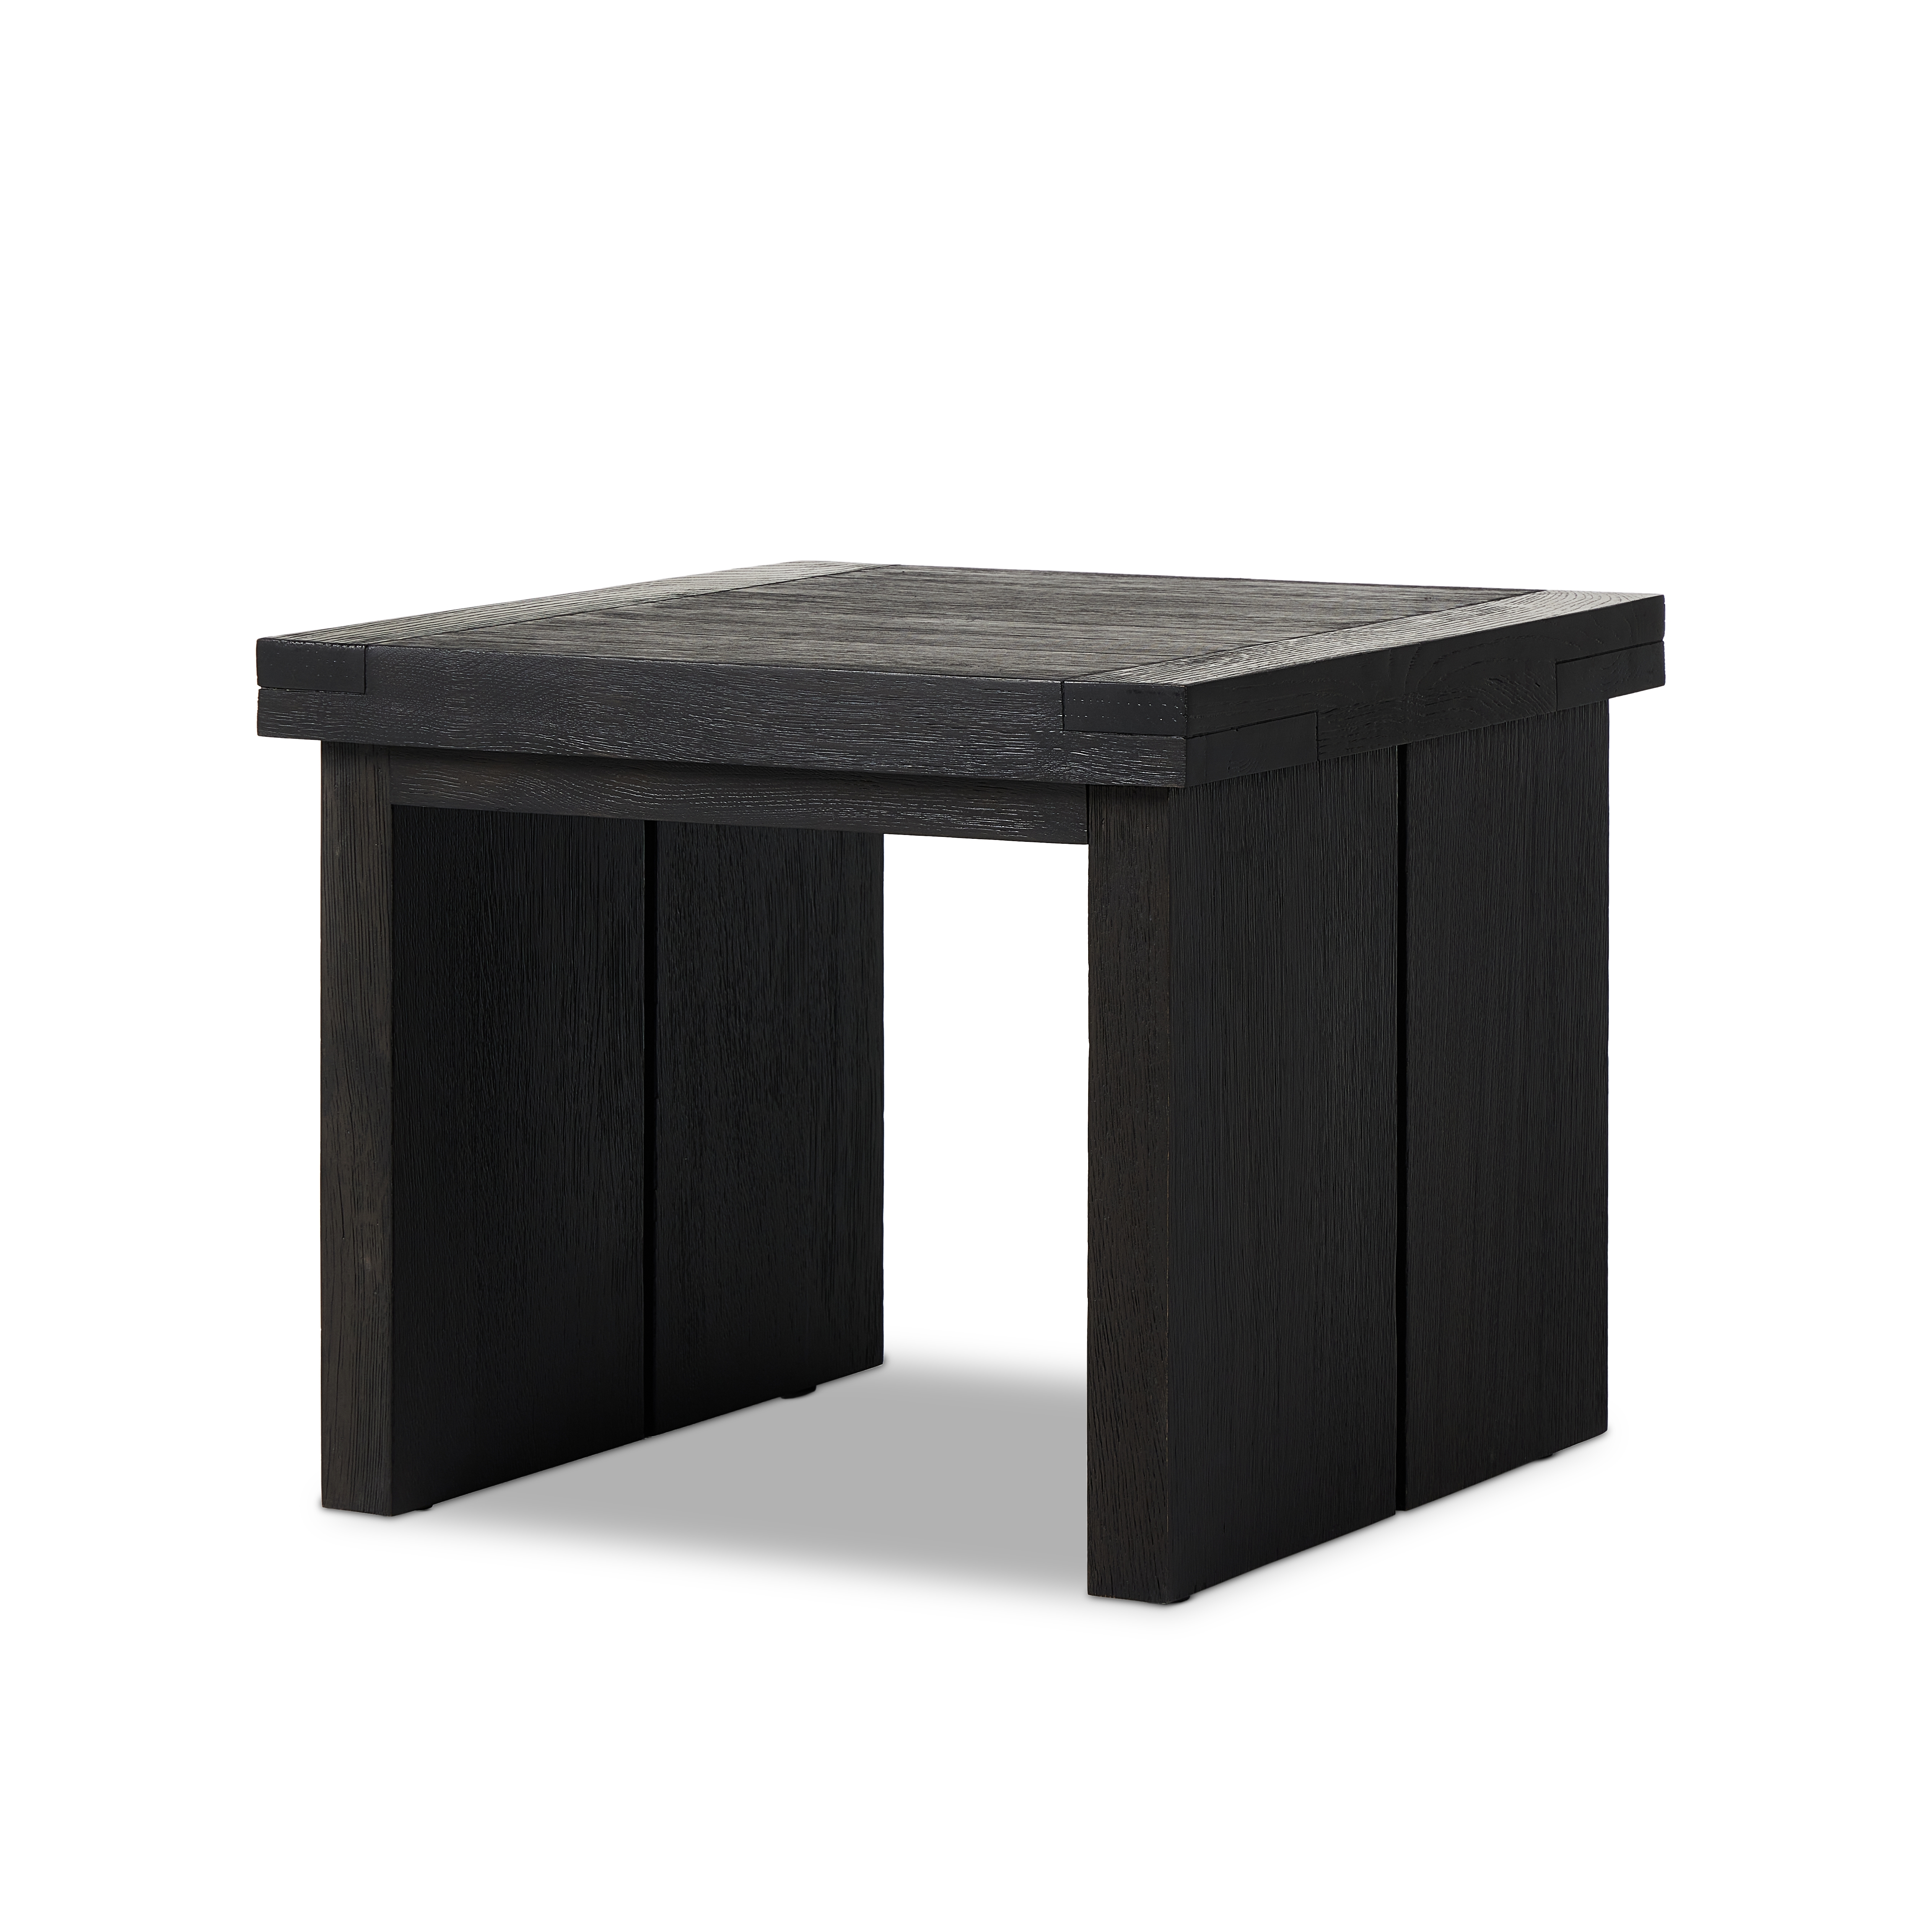 Warby End Table-Worn Black Oak - Image 0